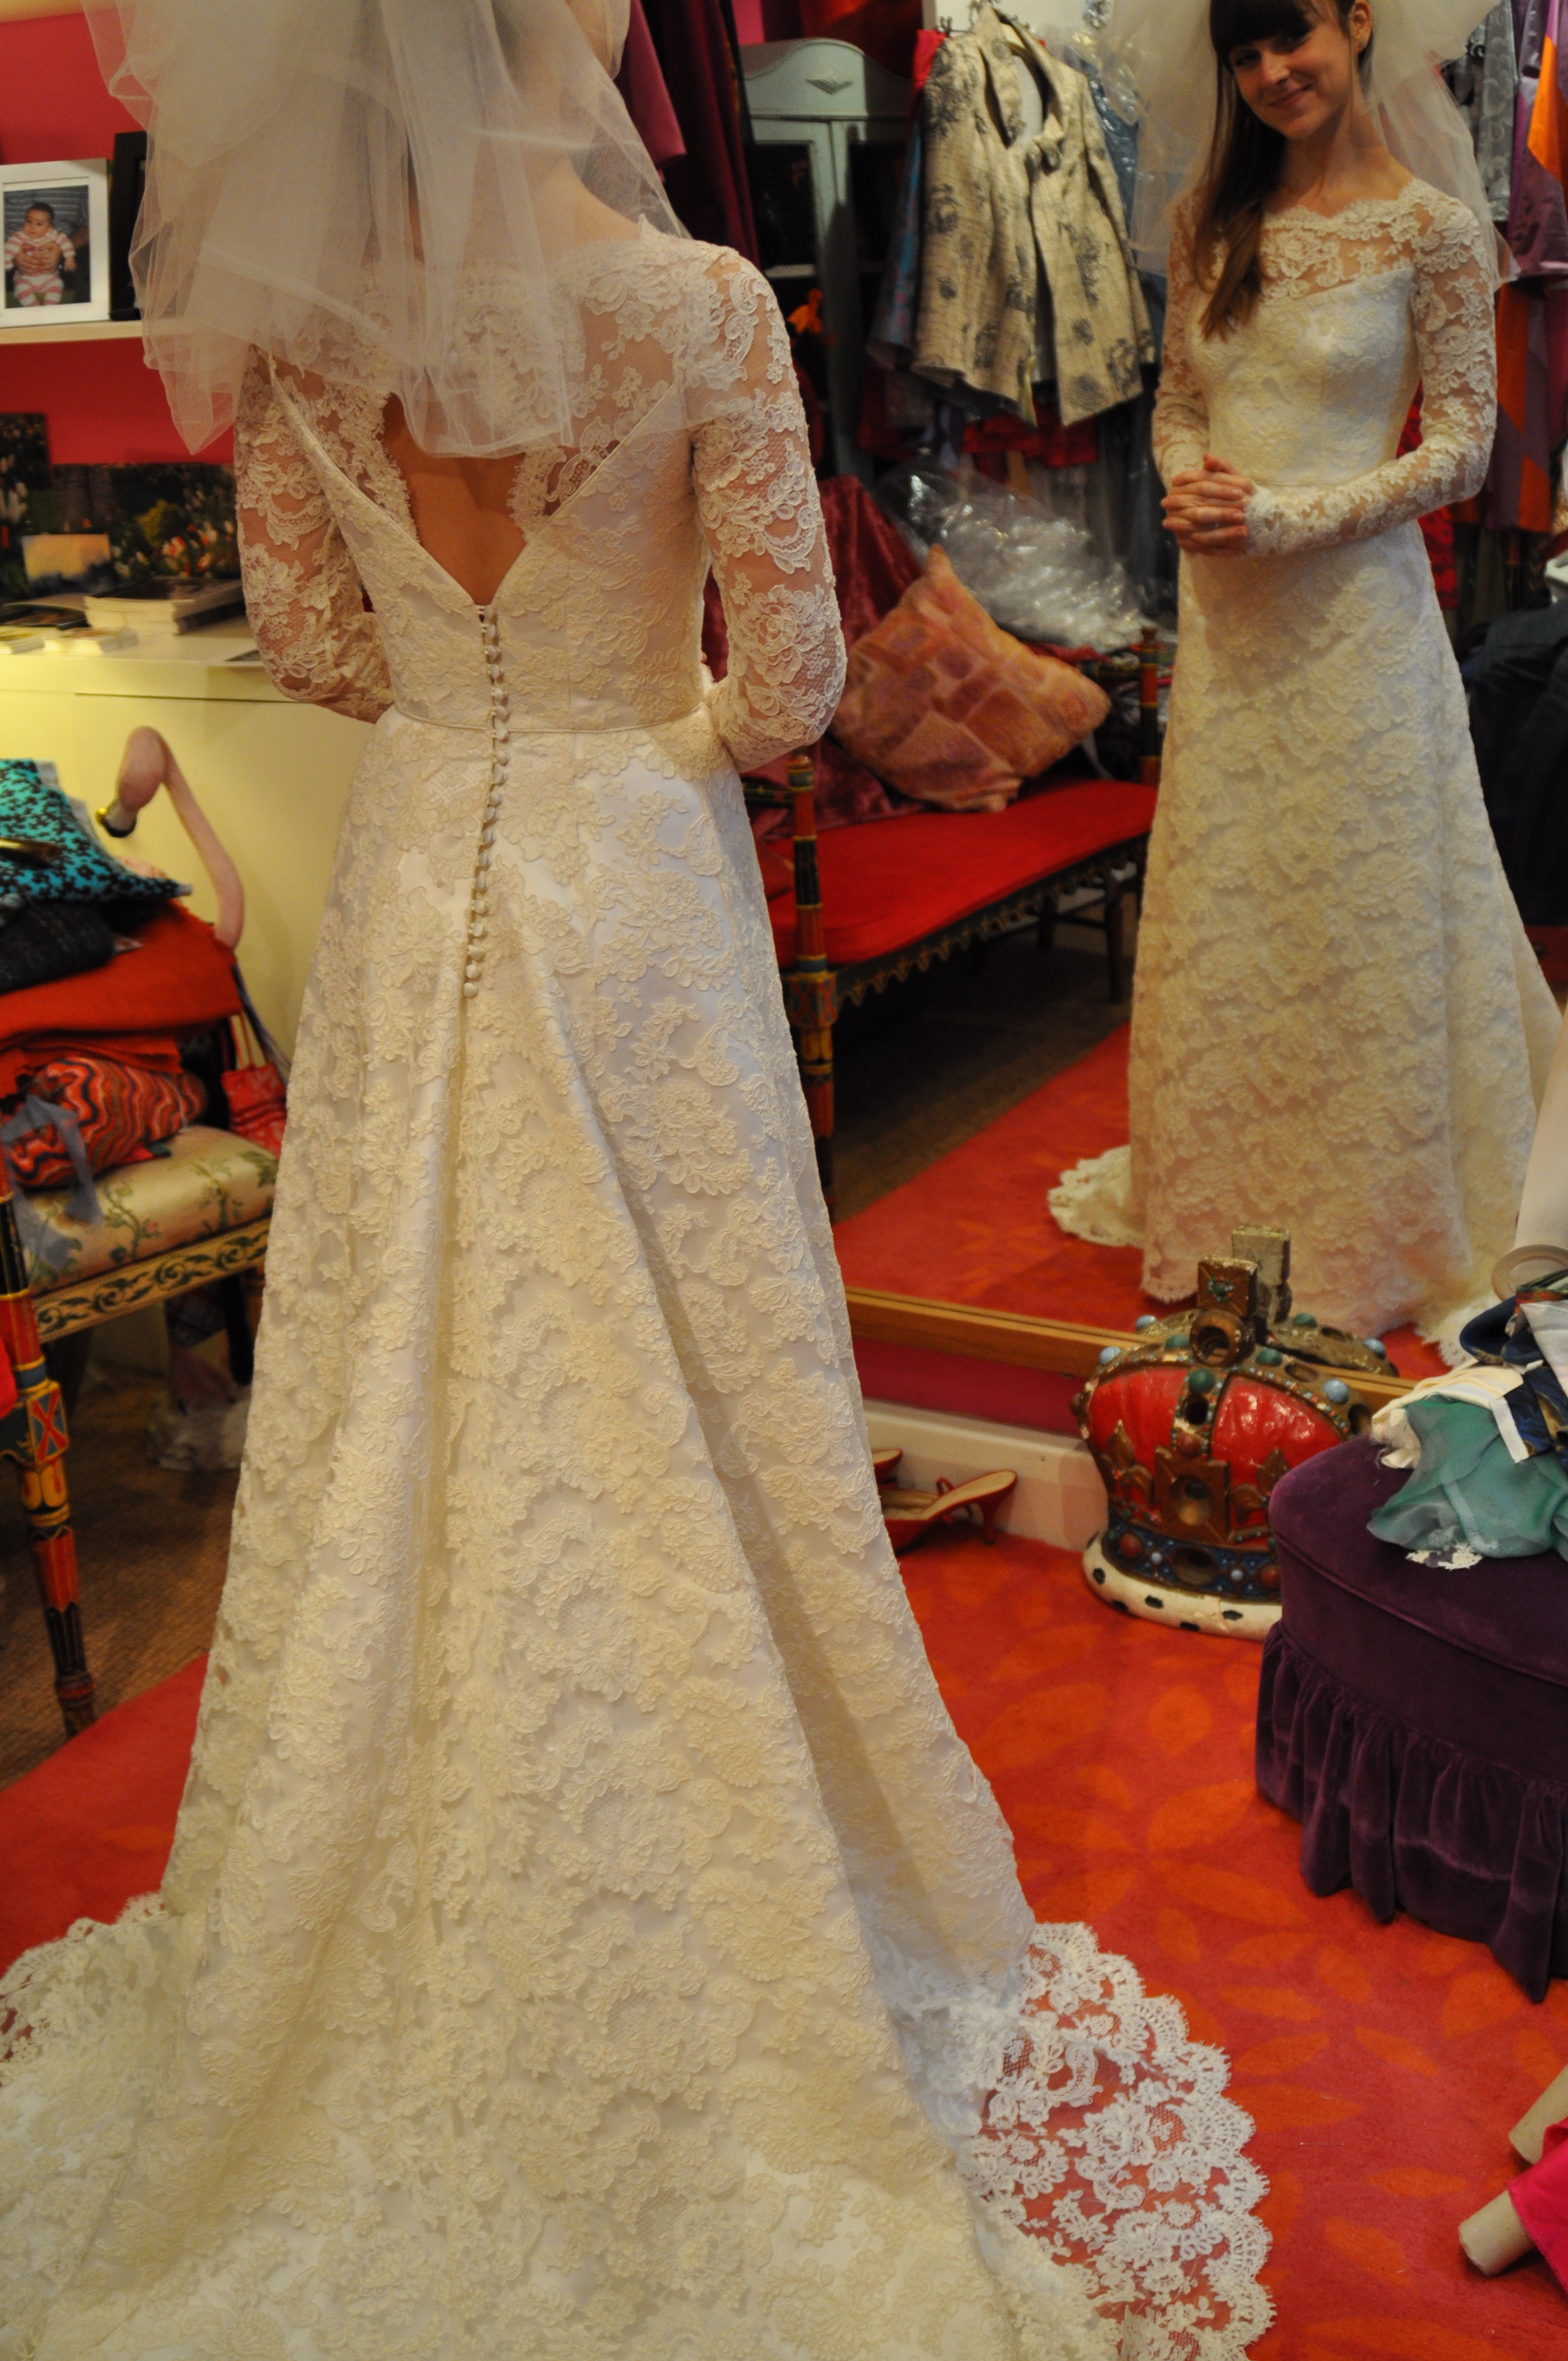 Stunning lace wedding dress